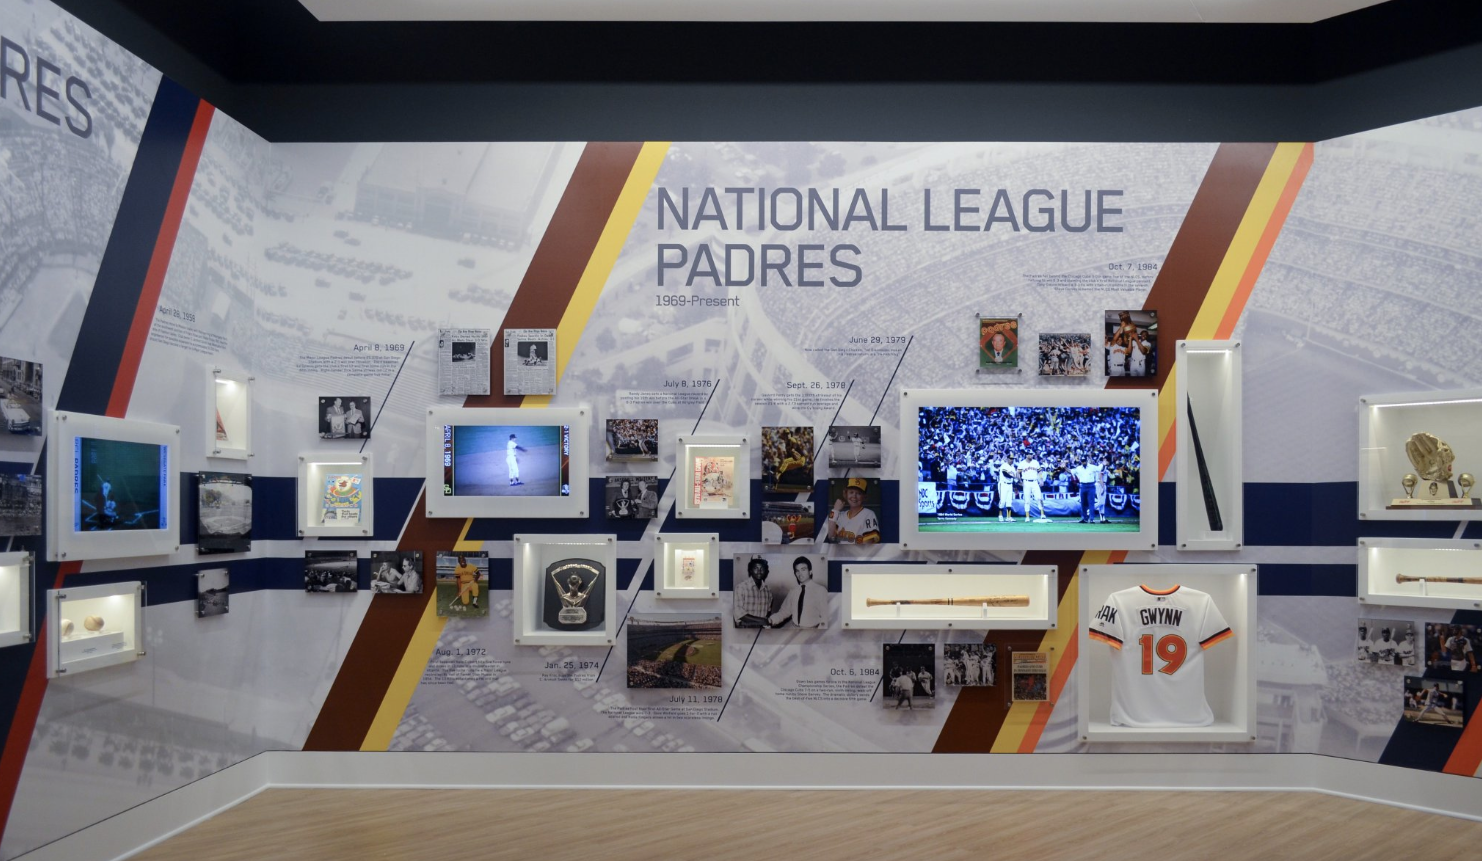 ArtisanHD provides Large Format Digital Printing for San Diego Padres Hall of Fame